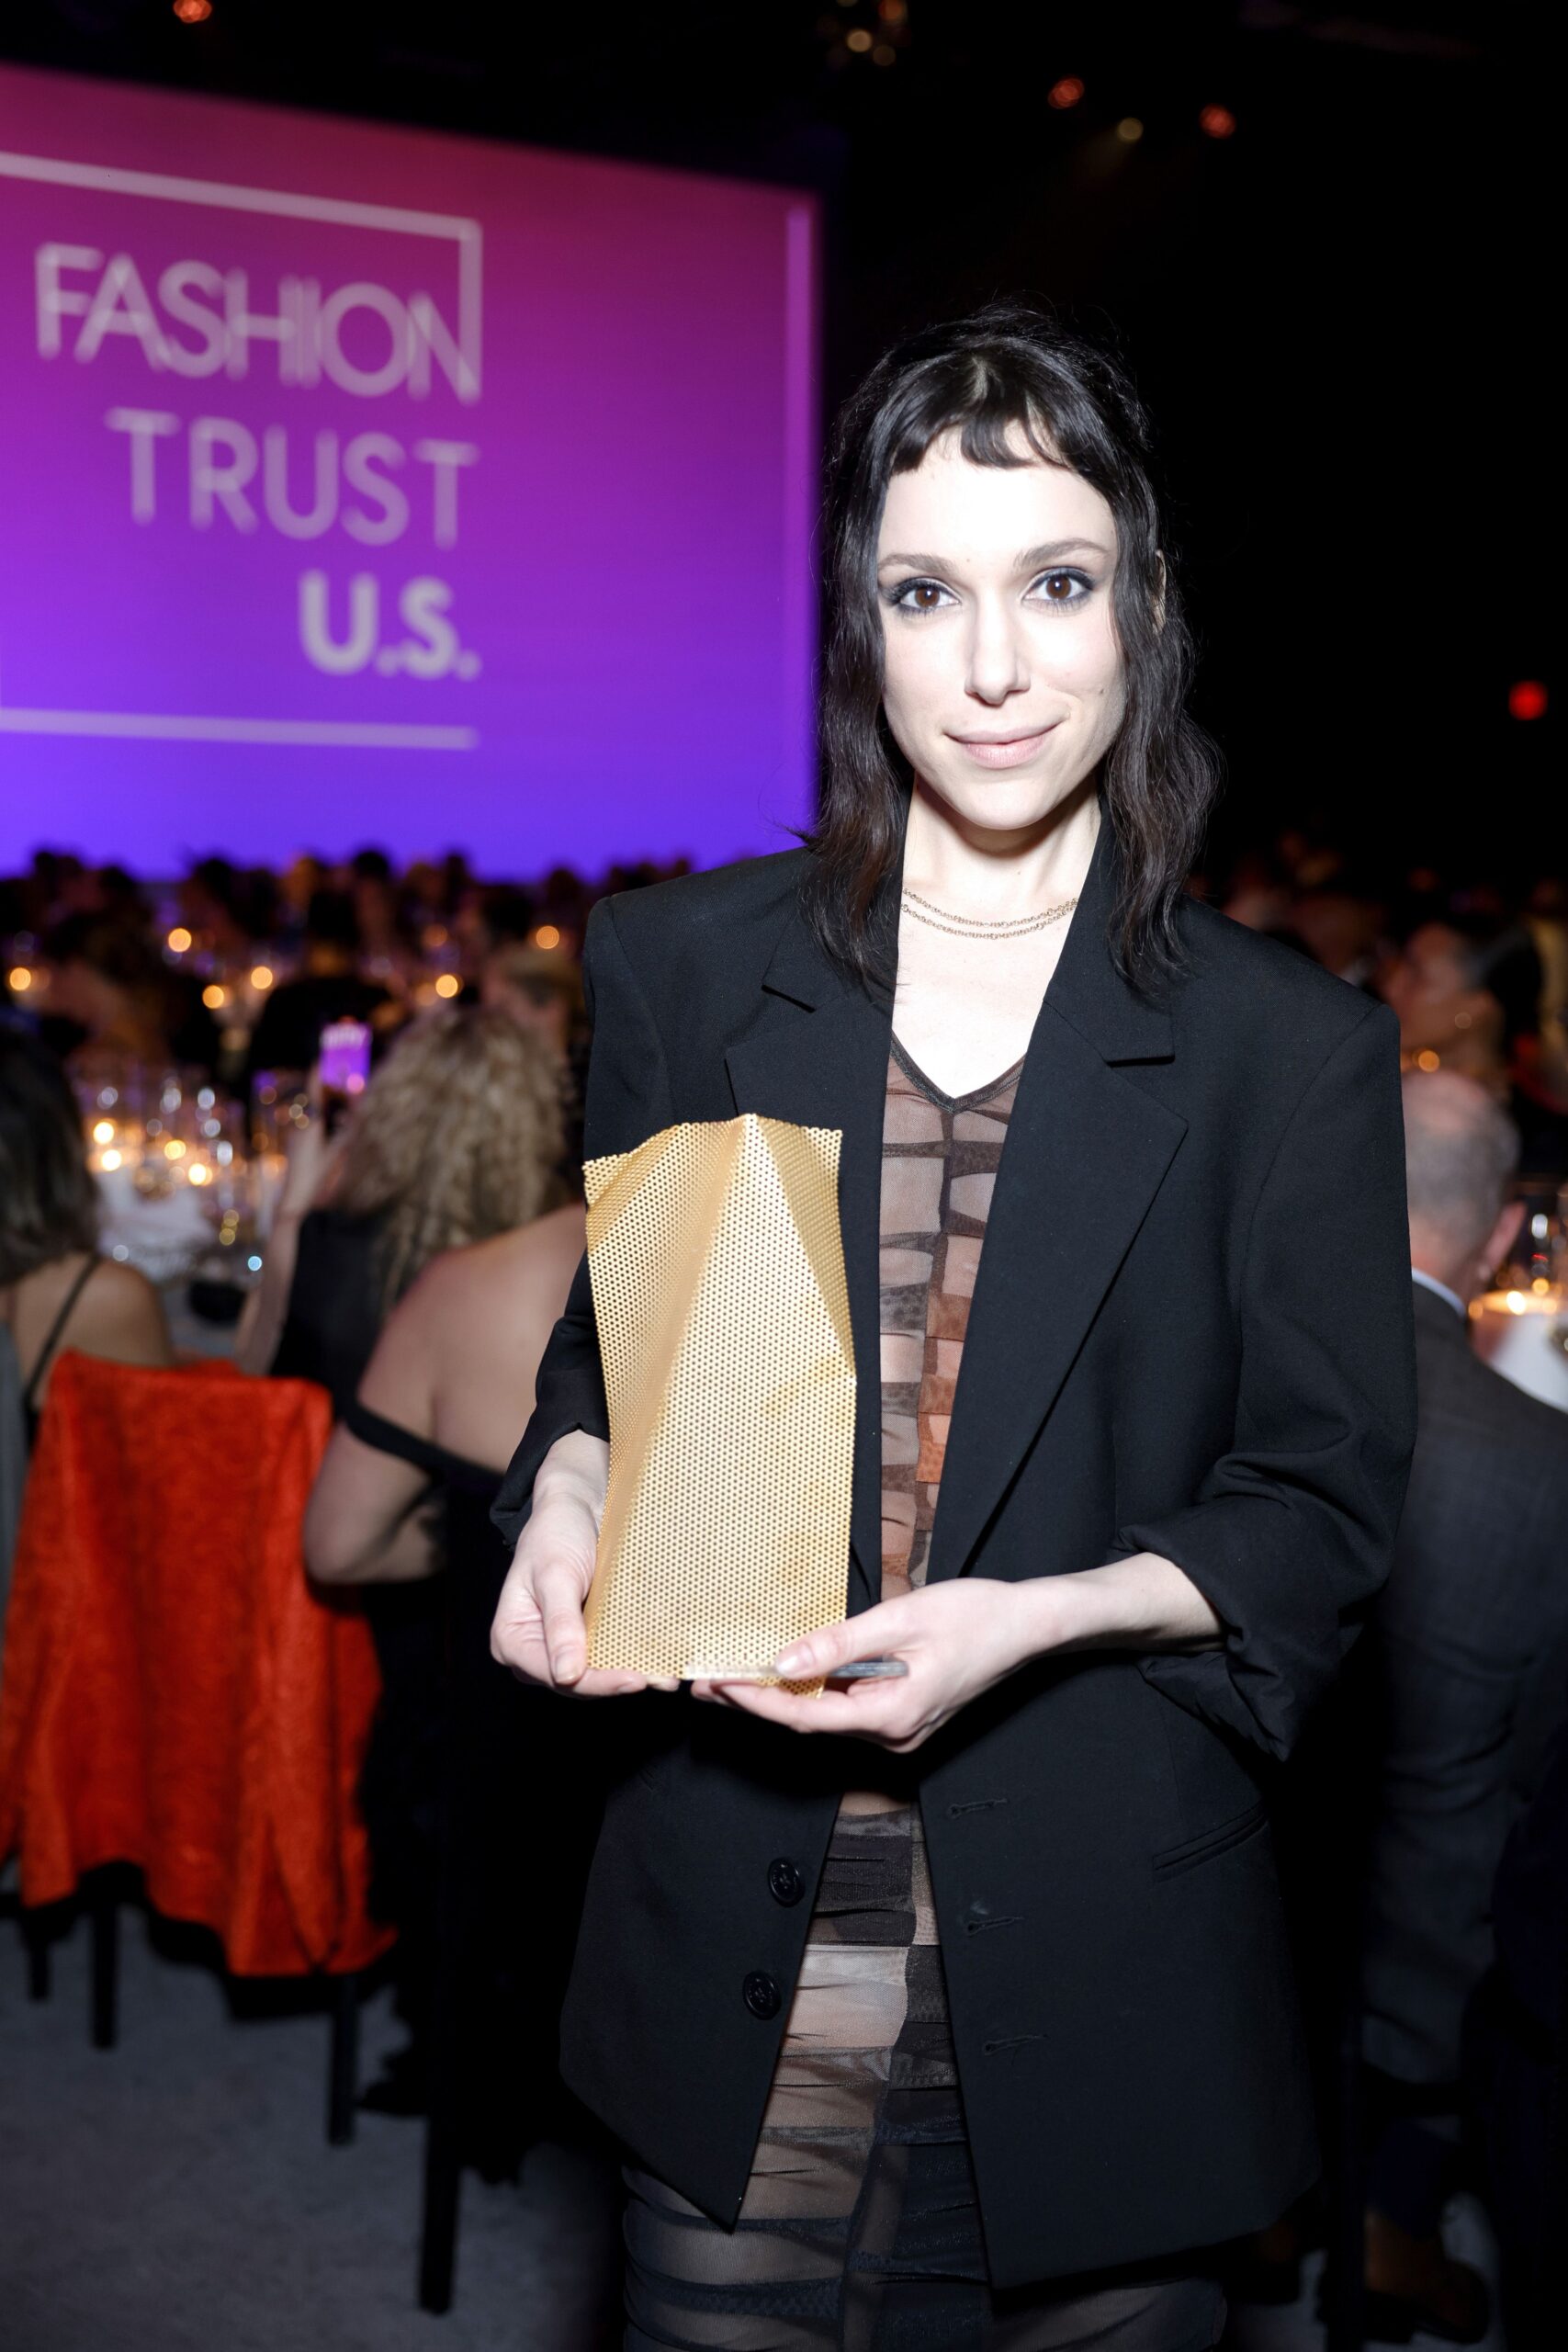 Puppets and Puppets, Elena Velez Win Fashion Trust US Awards